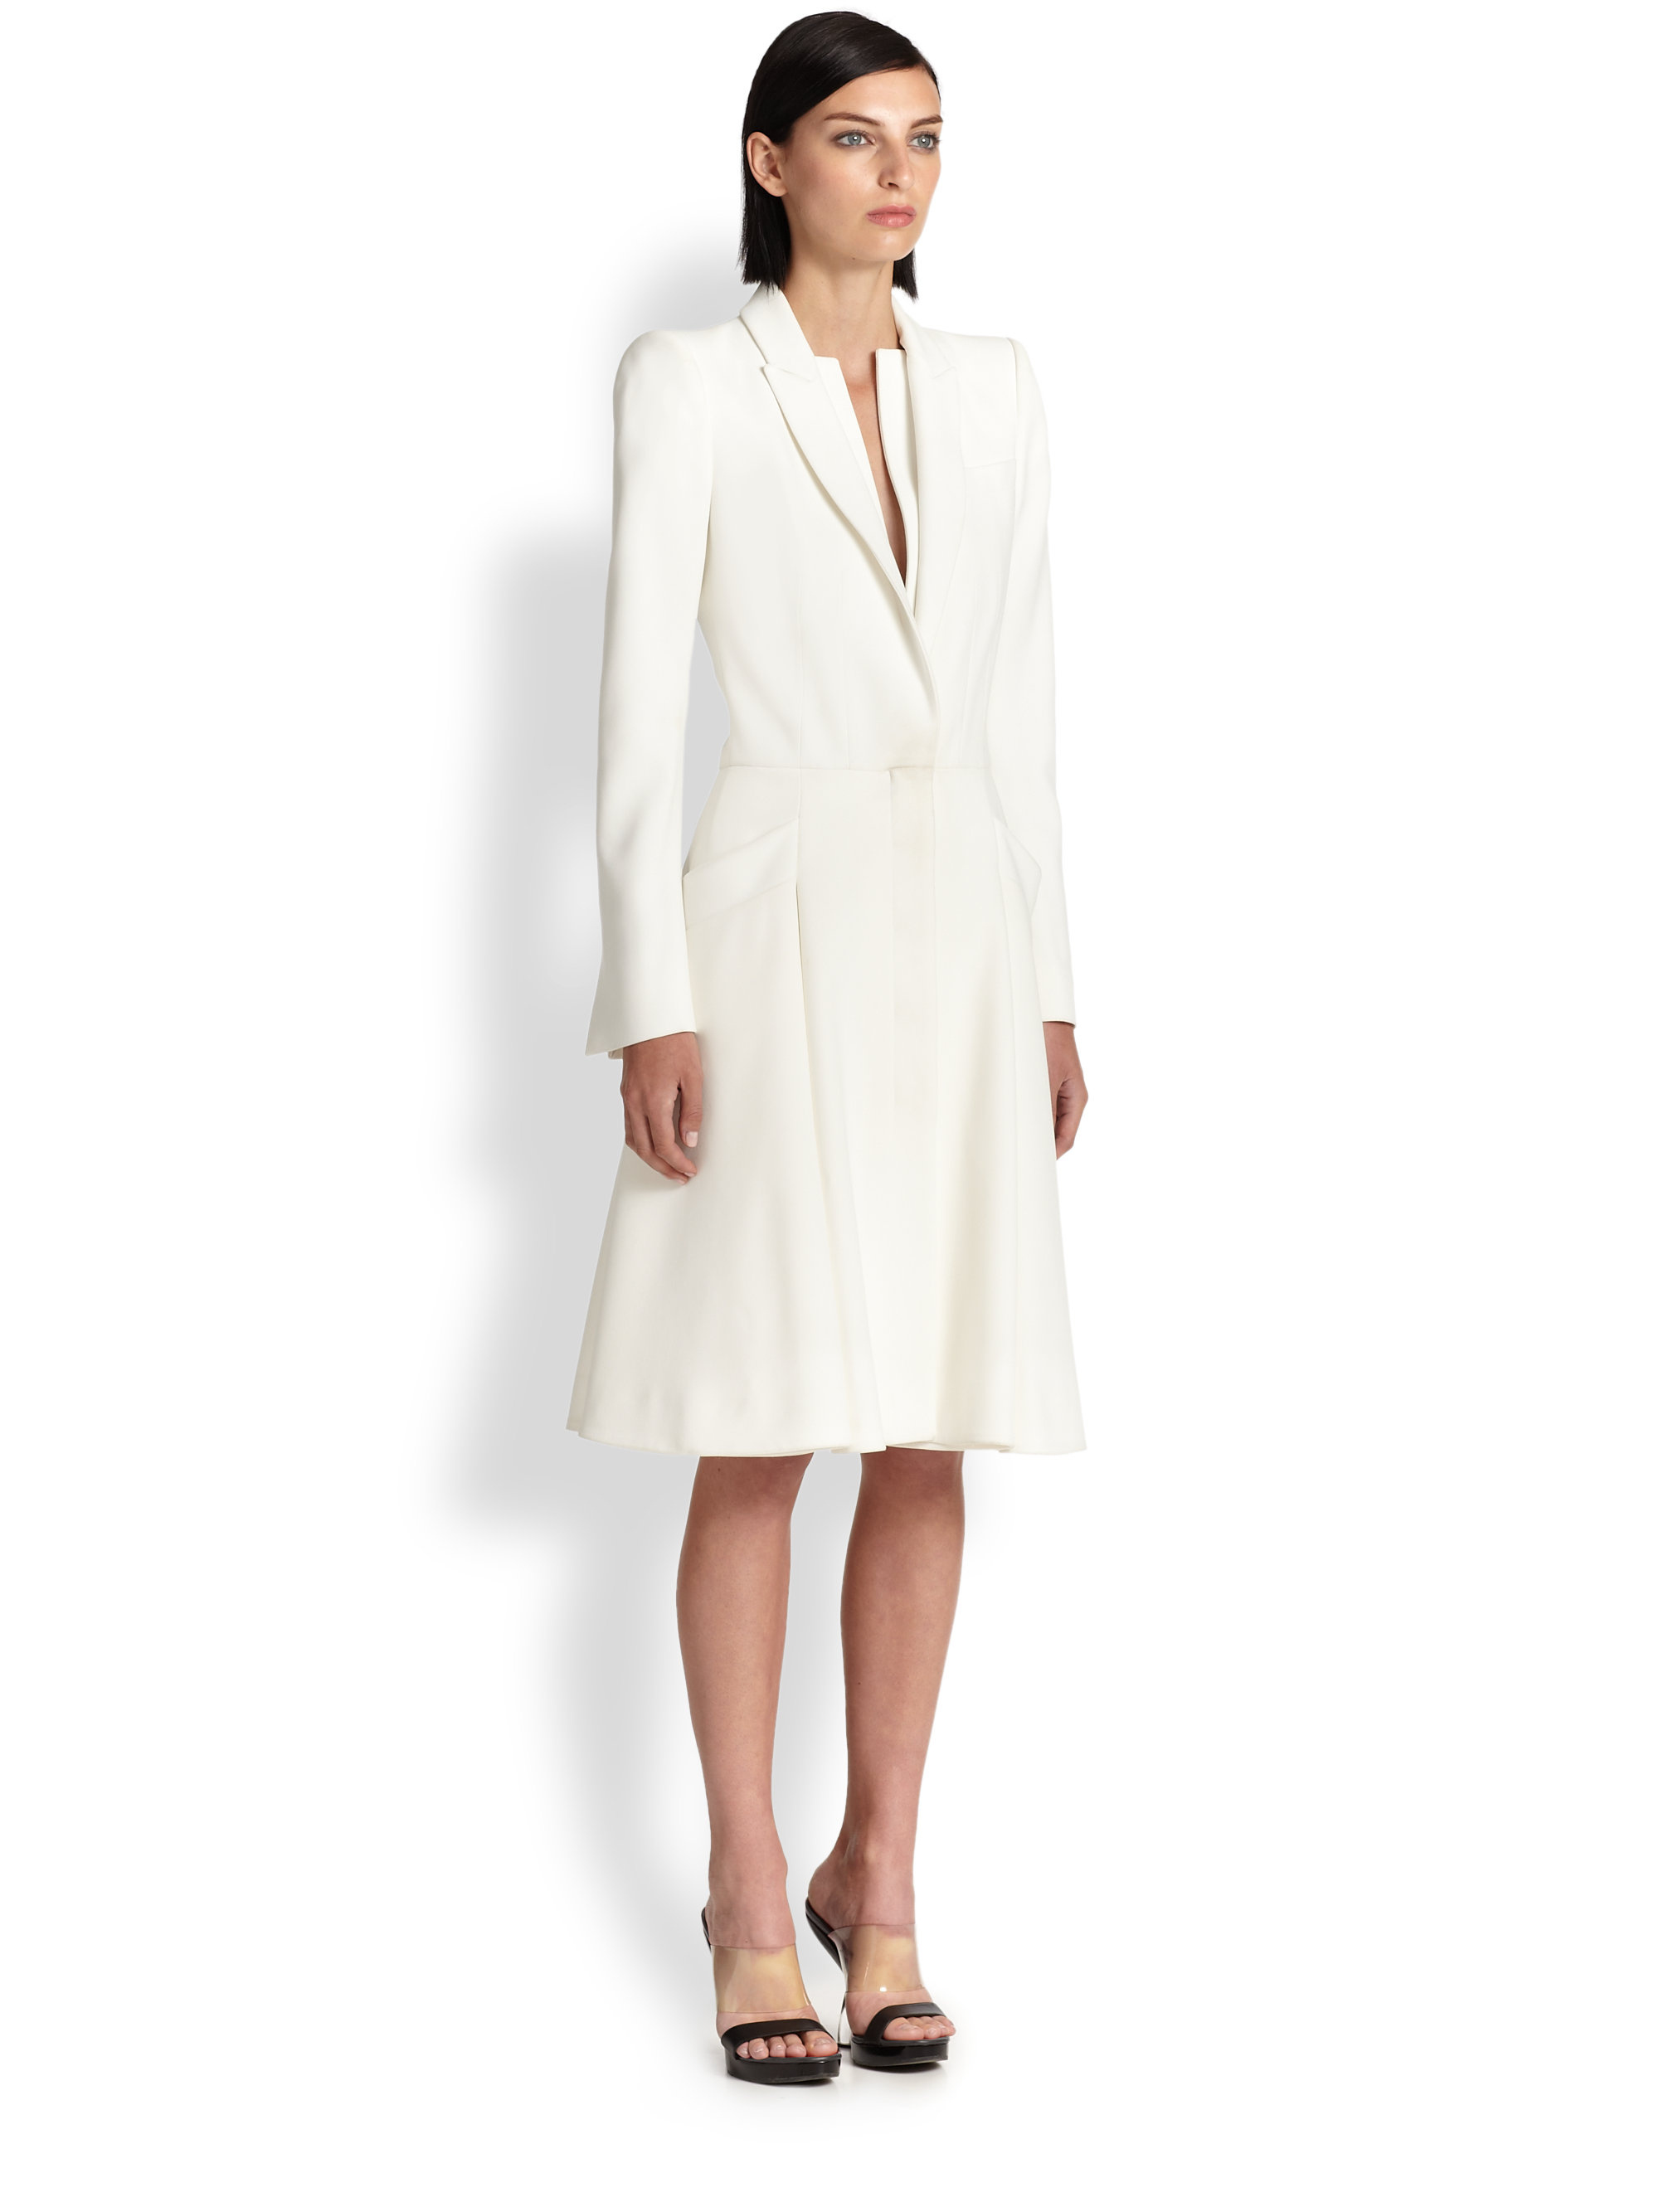 Images of White Dress Coat - Reikian